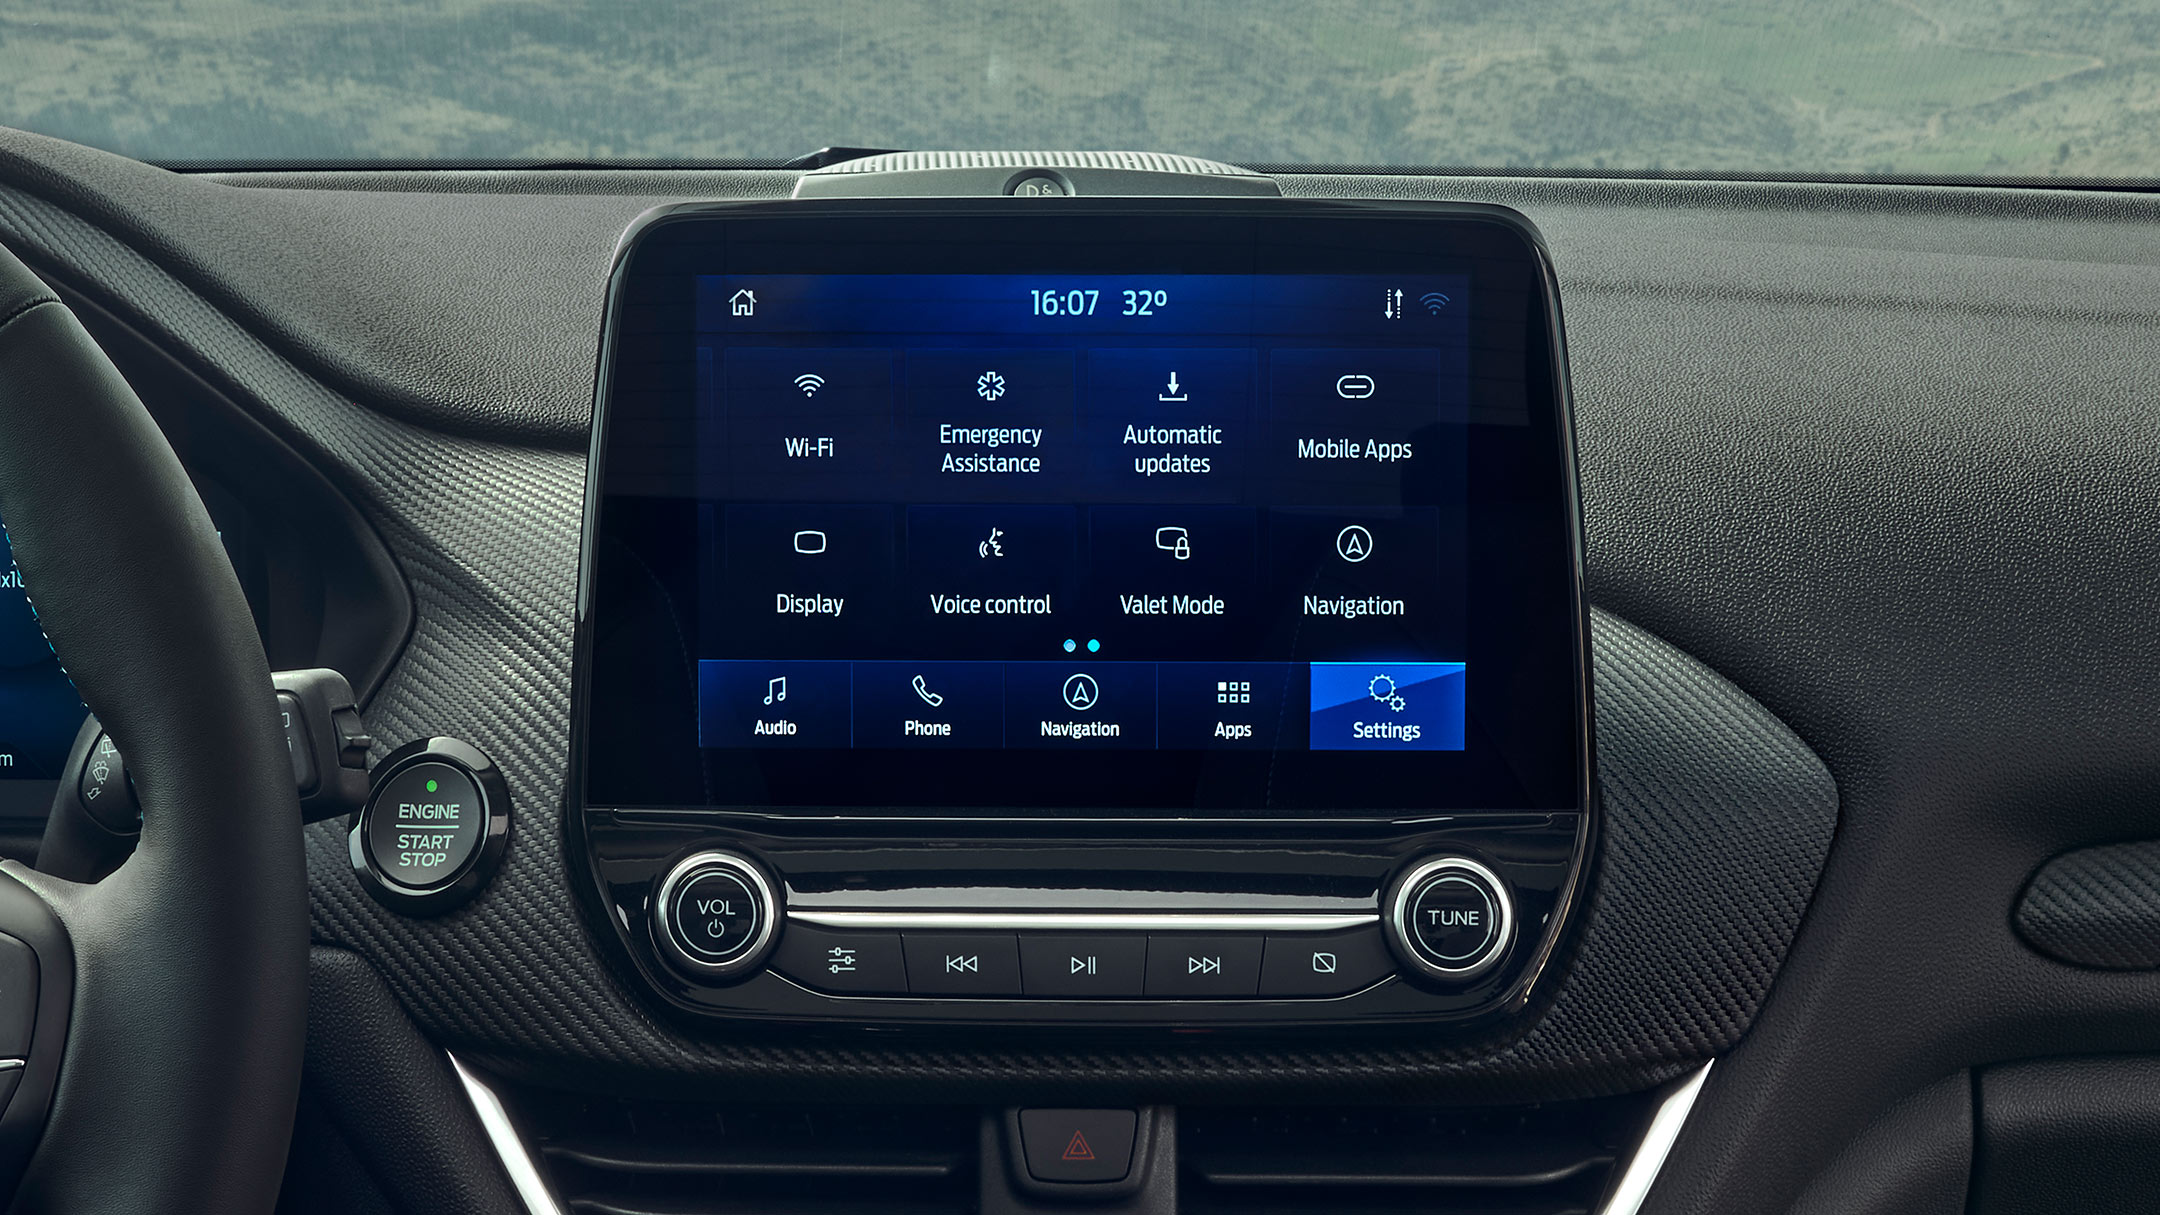 Ford Fiesta Innenraum. Detailansicht des Ford SYNC Touchscreens